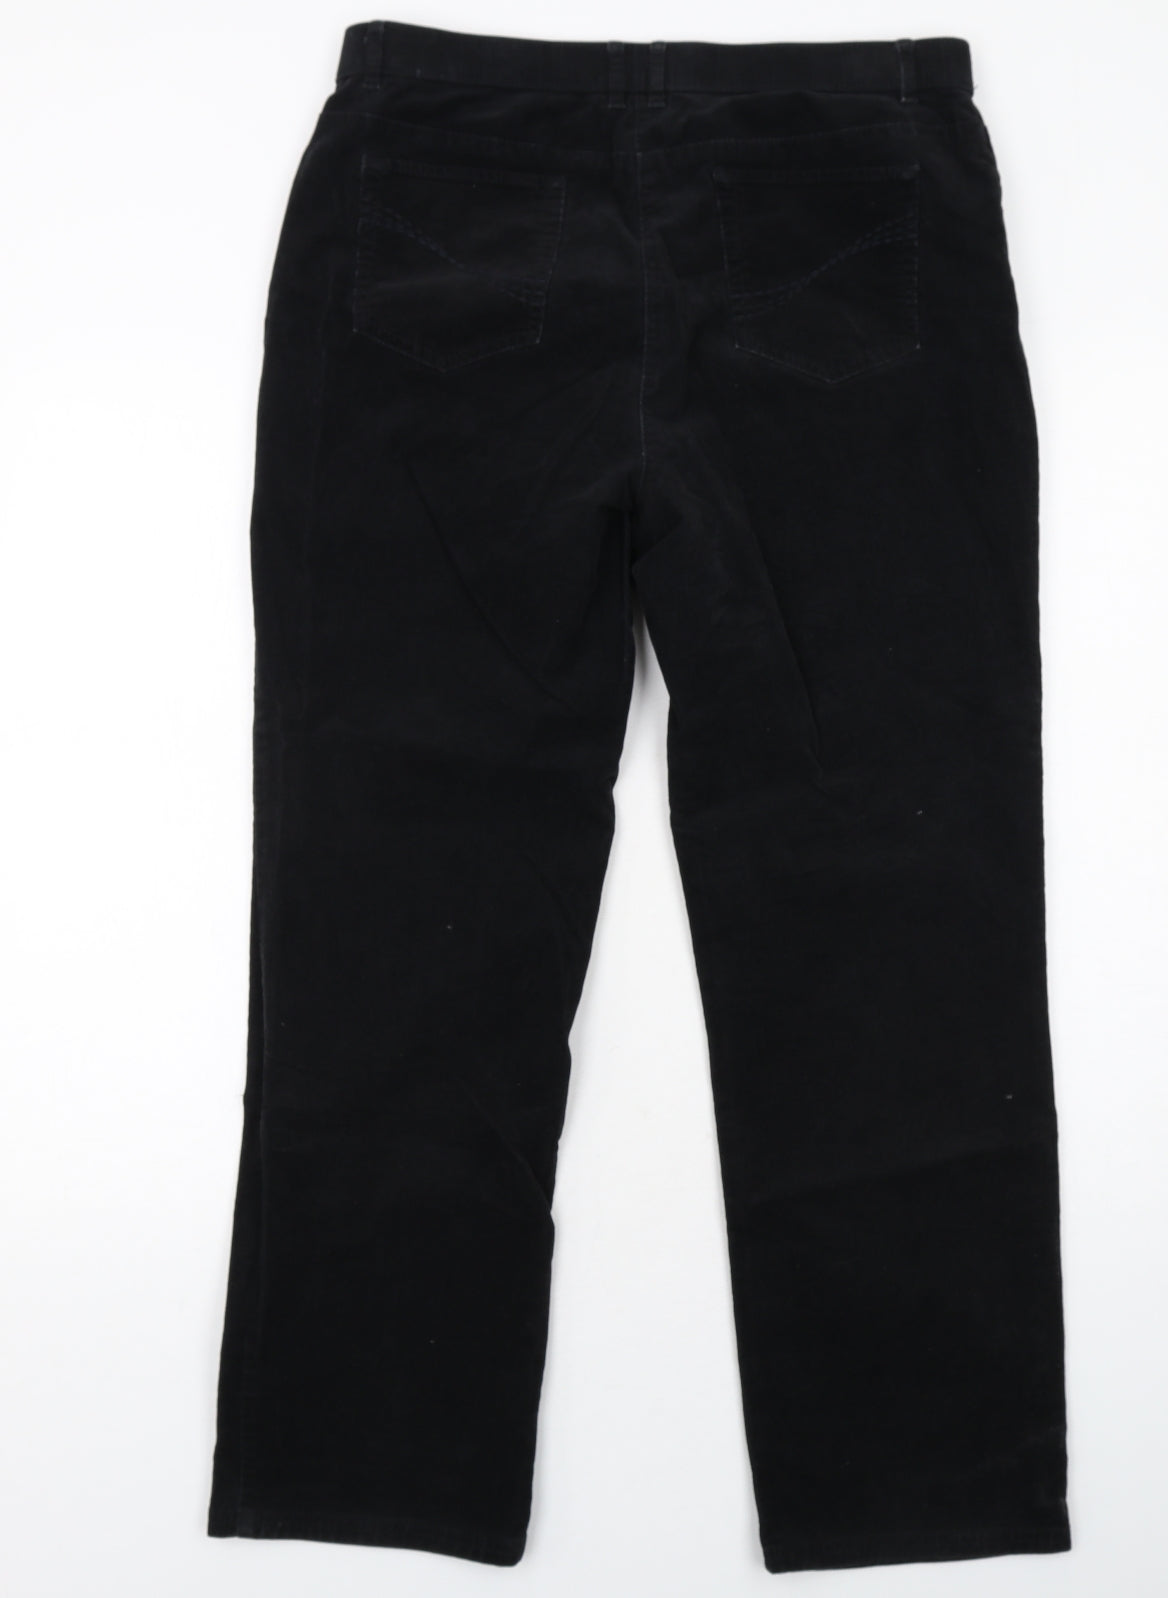 Classic Womens Black Cotton Trousers Size 14 Regular Zip